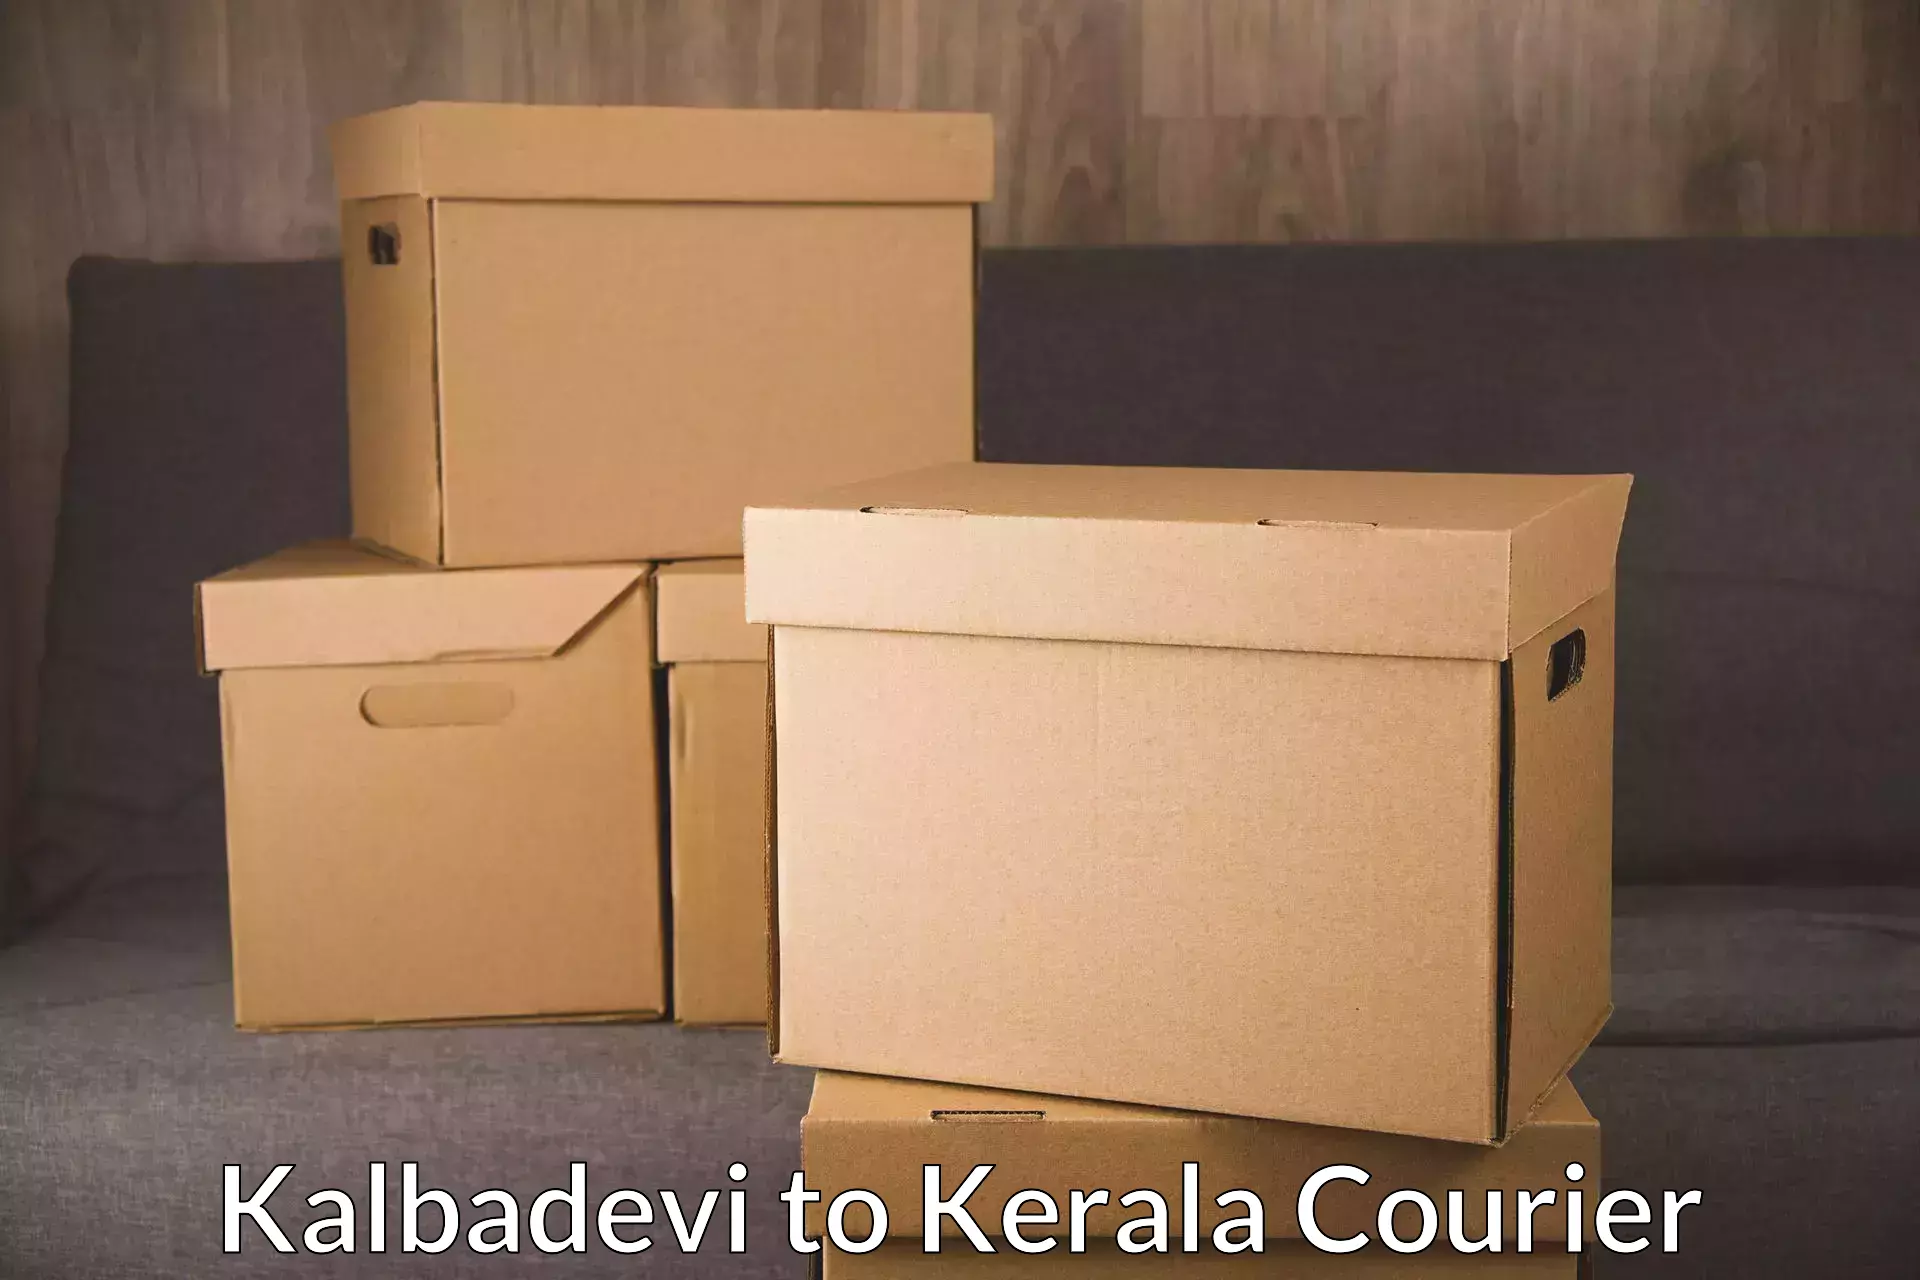 Global logistics network Kalbadevi to Parappa